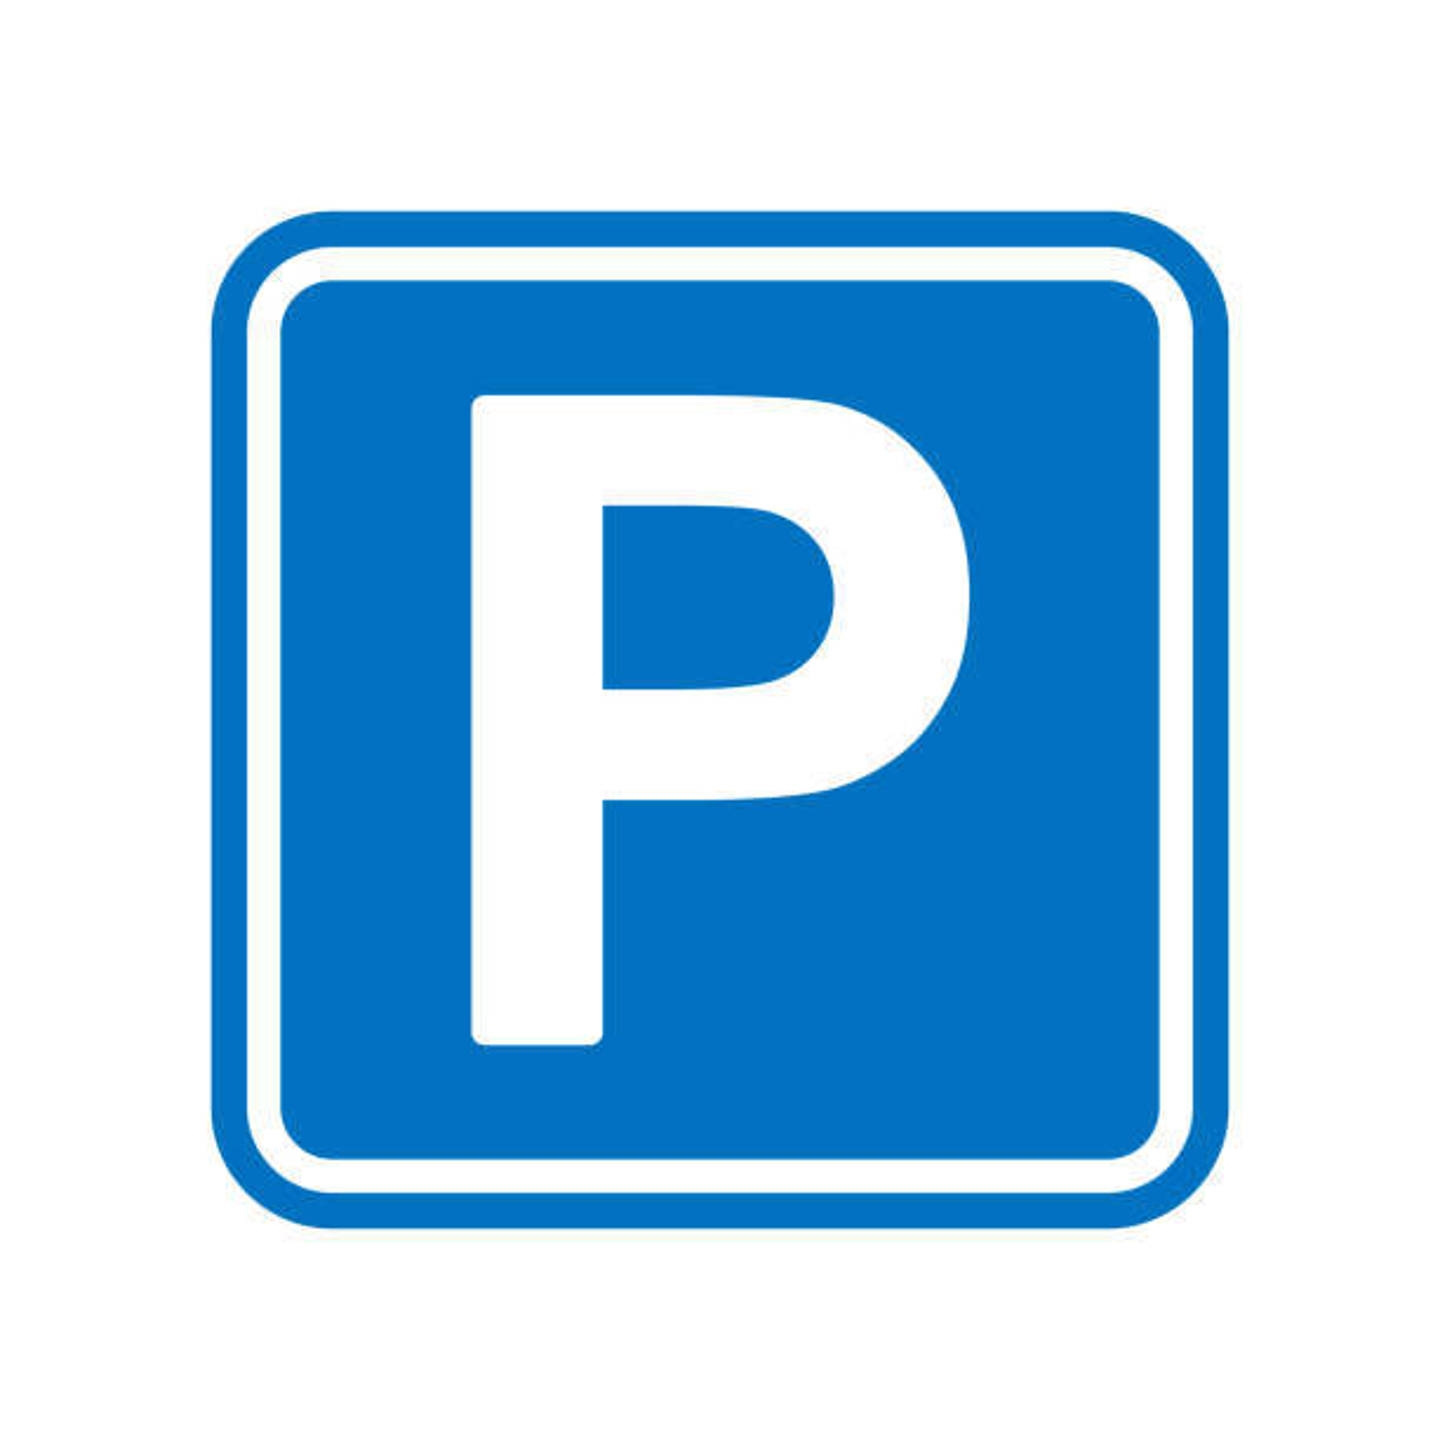 Parking te  koop in Sint-Jans-Molenbeek 1080 77250.00€  slaapkamers 12.50m² - Zoekertje 1324620